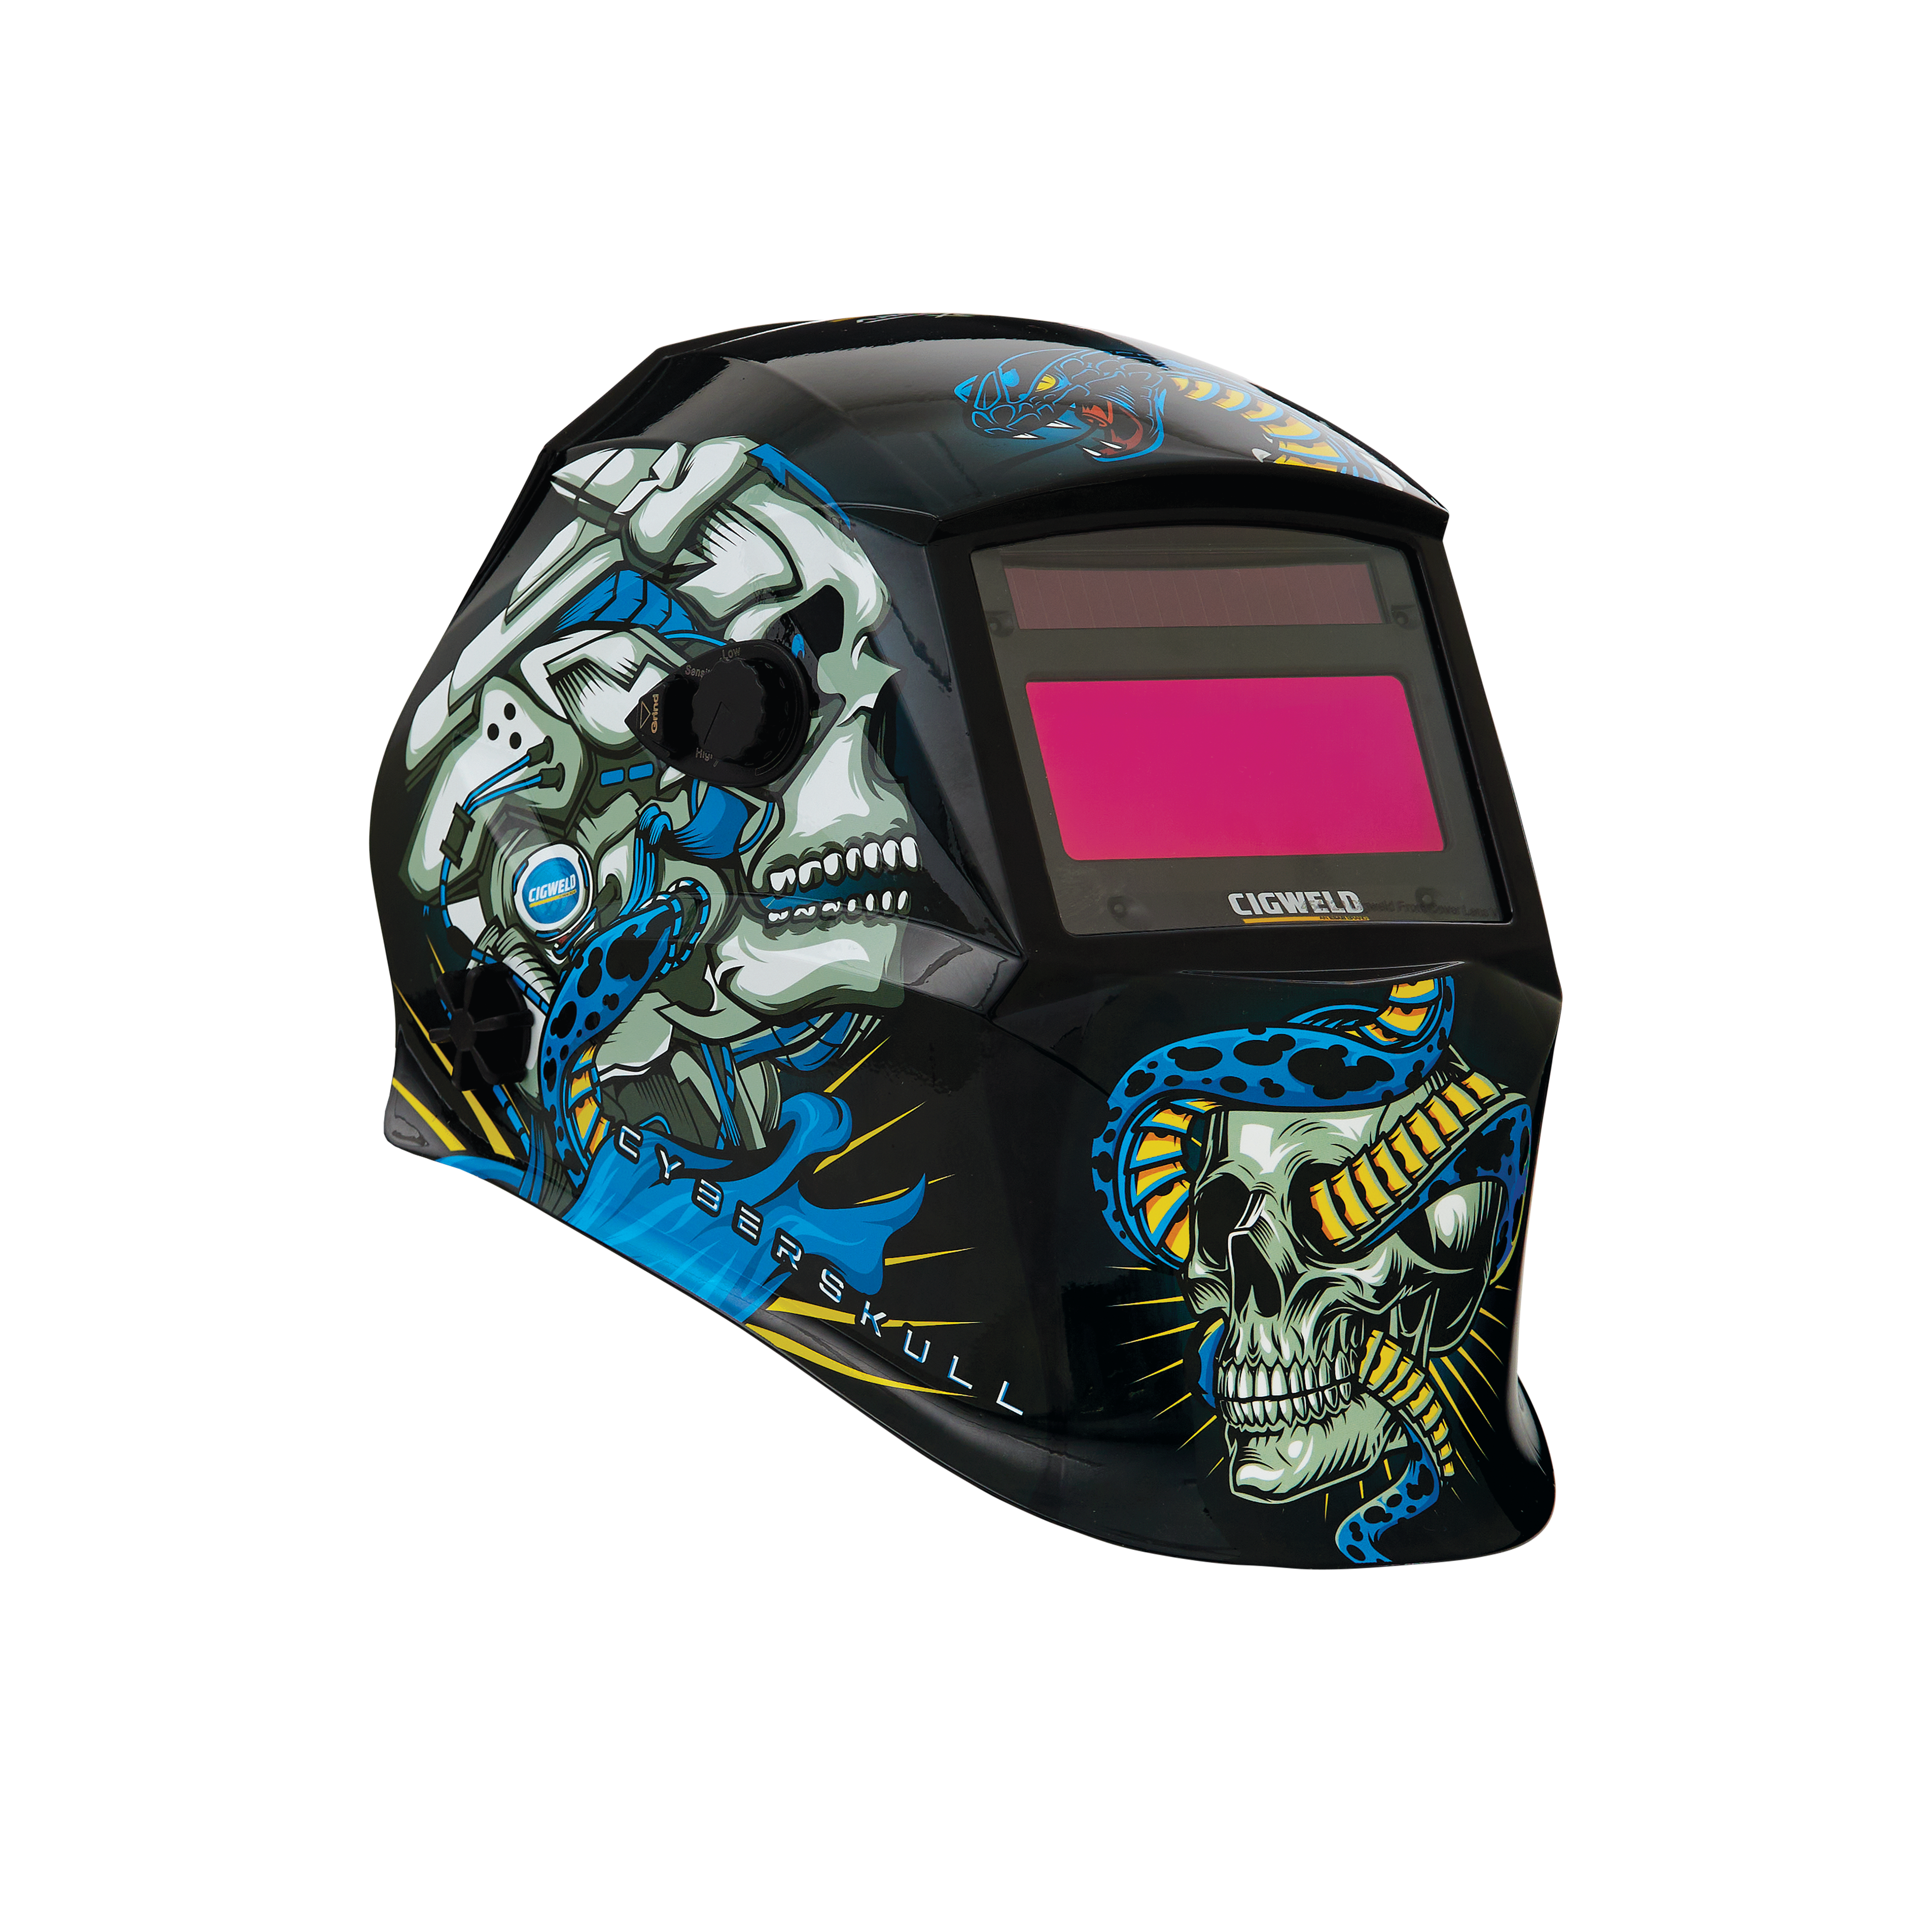 Cigweld Arcmaster XC30 CyberSkull Welding Helmet